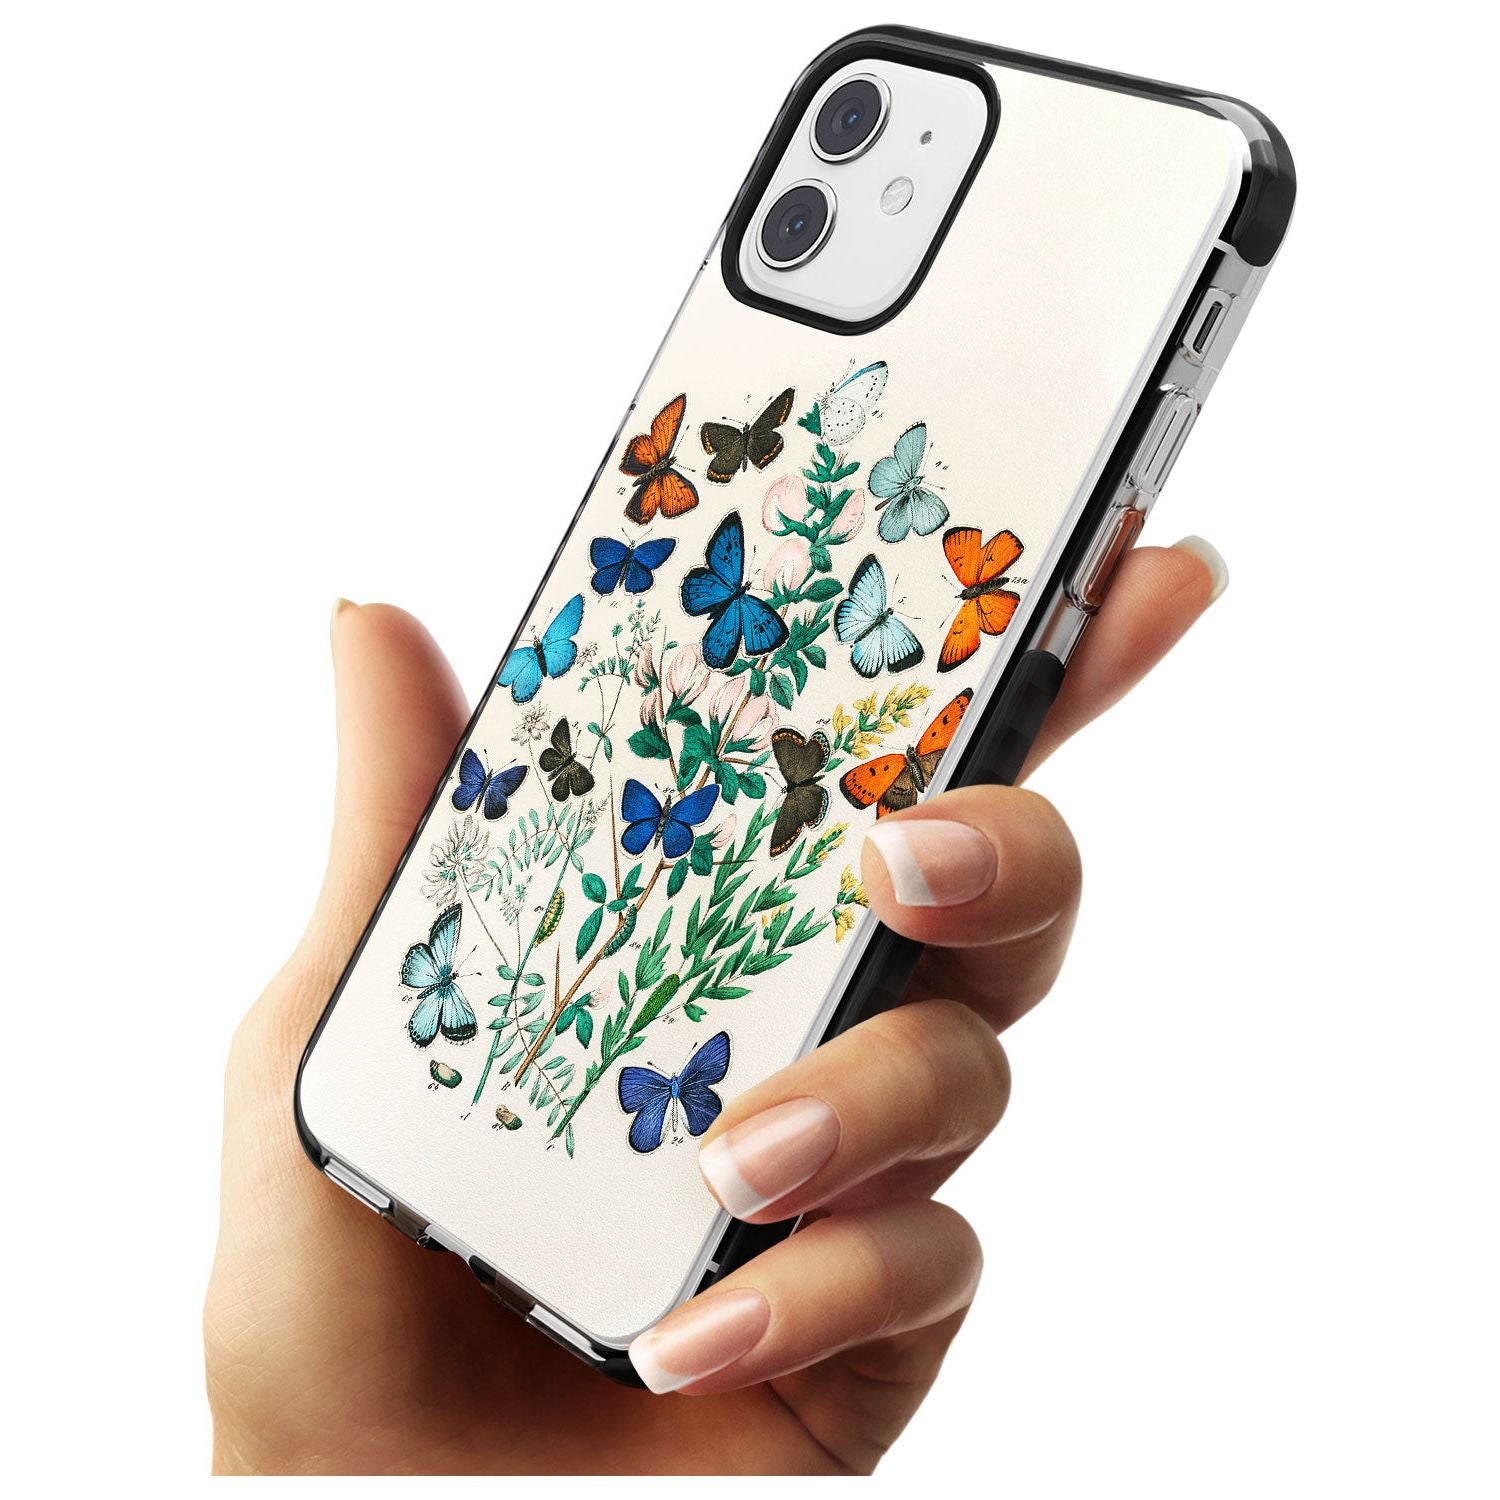 European Butterflies Black Impact Phone Case for iPhone 11 Pro Max